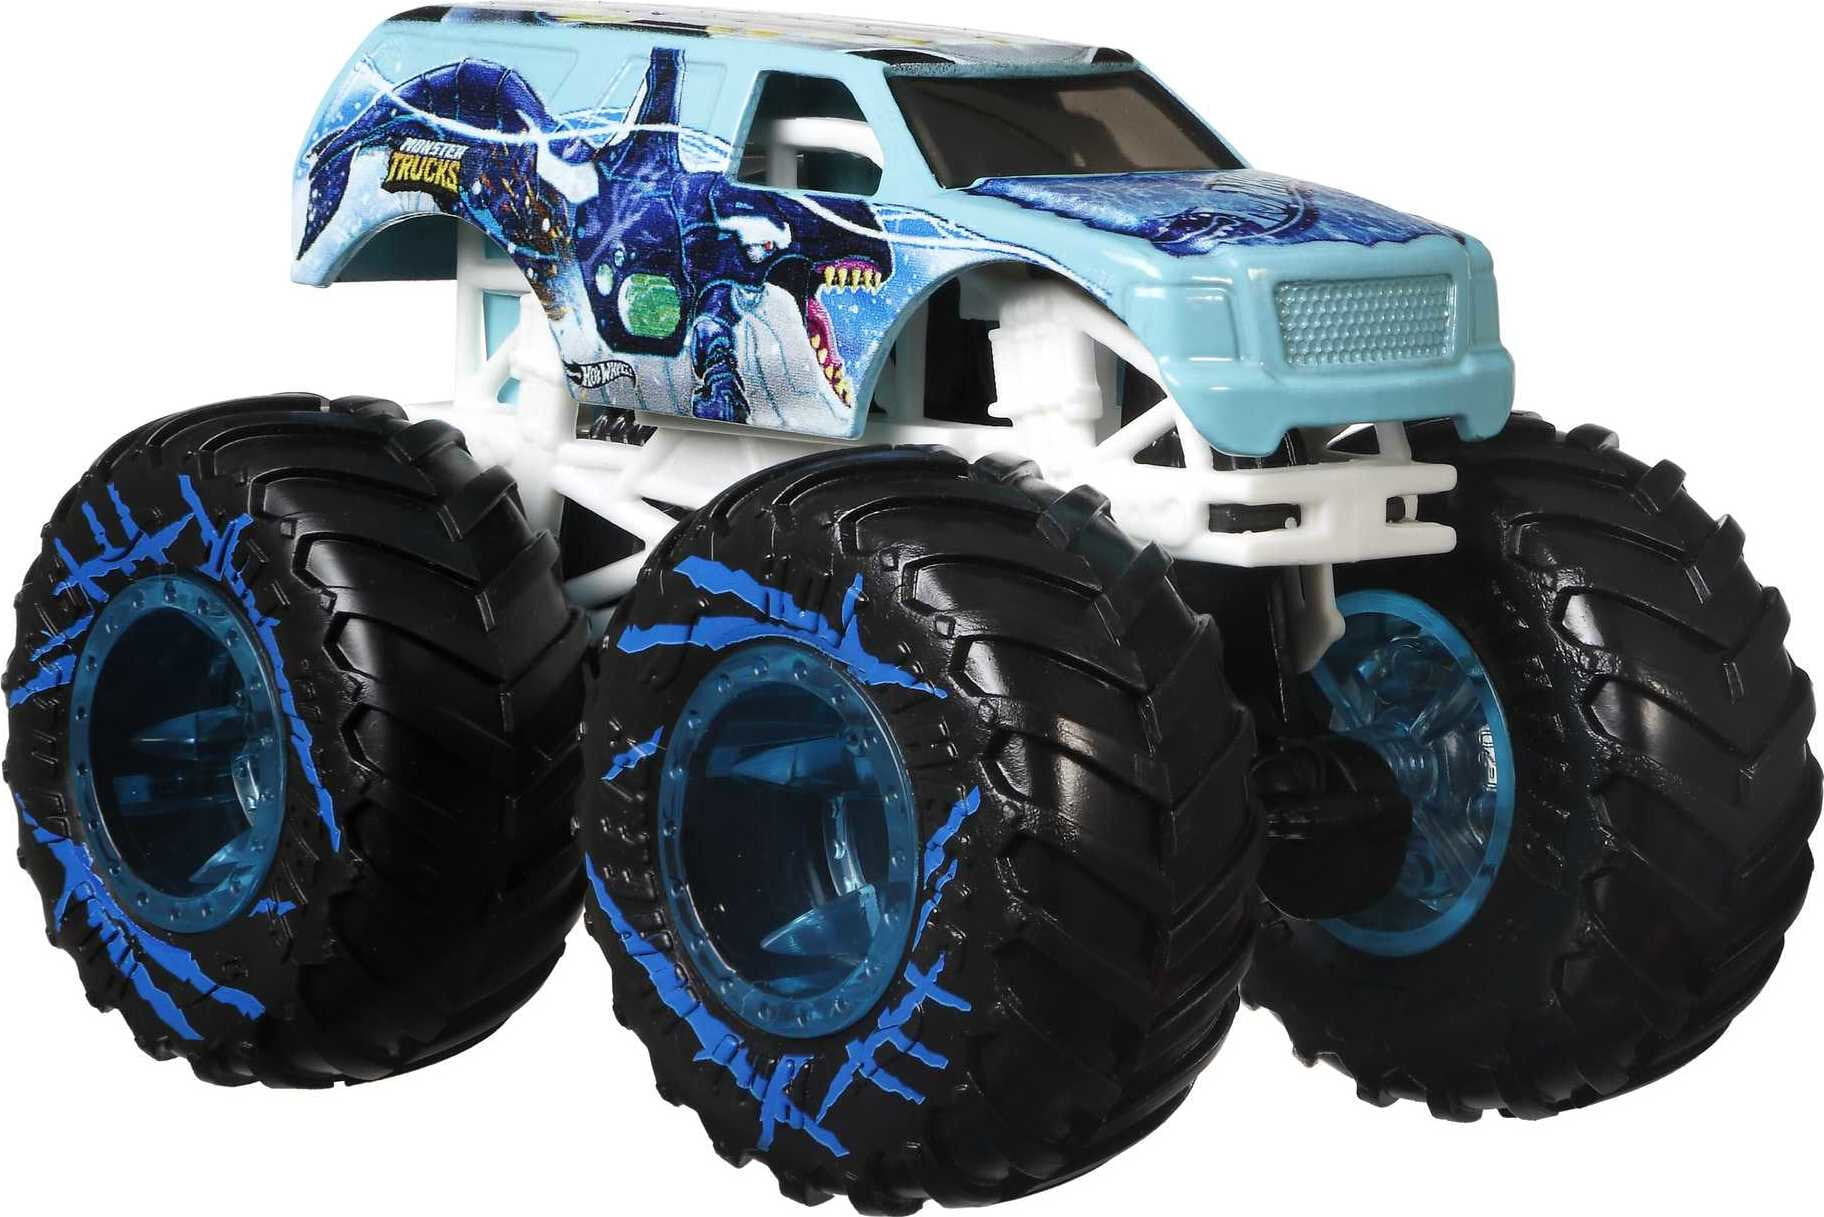 Hot Wheels Monster Trucks Veículo de Brinquedo 1:64 Pacote de 2 -  EletroTrade